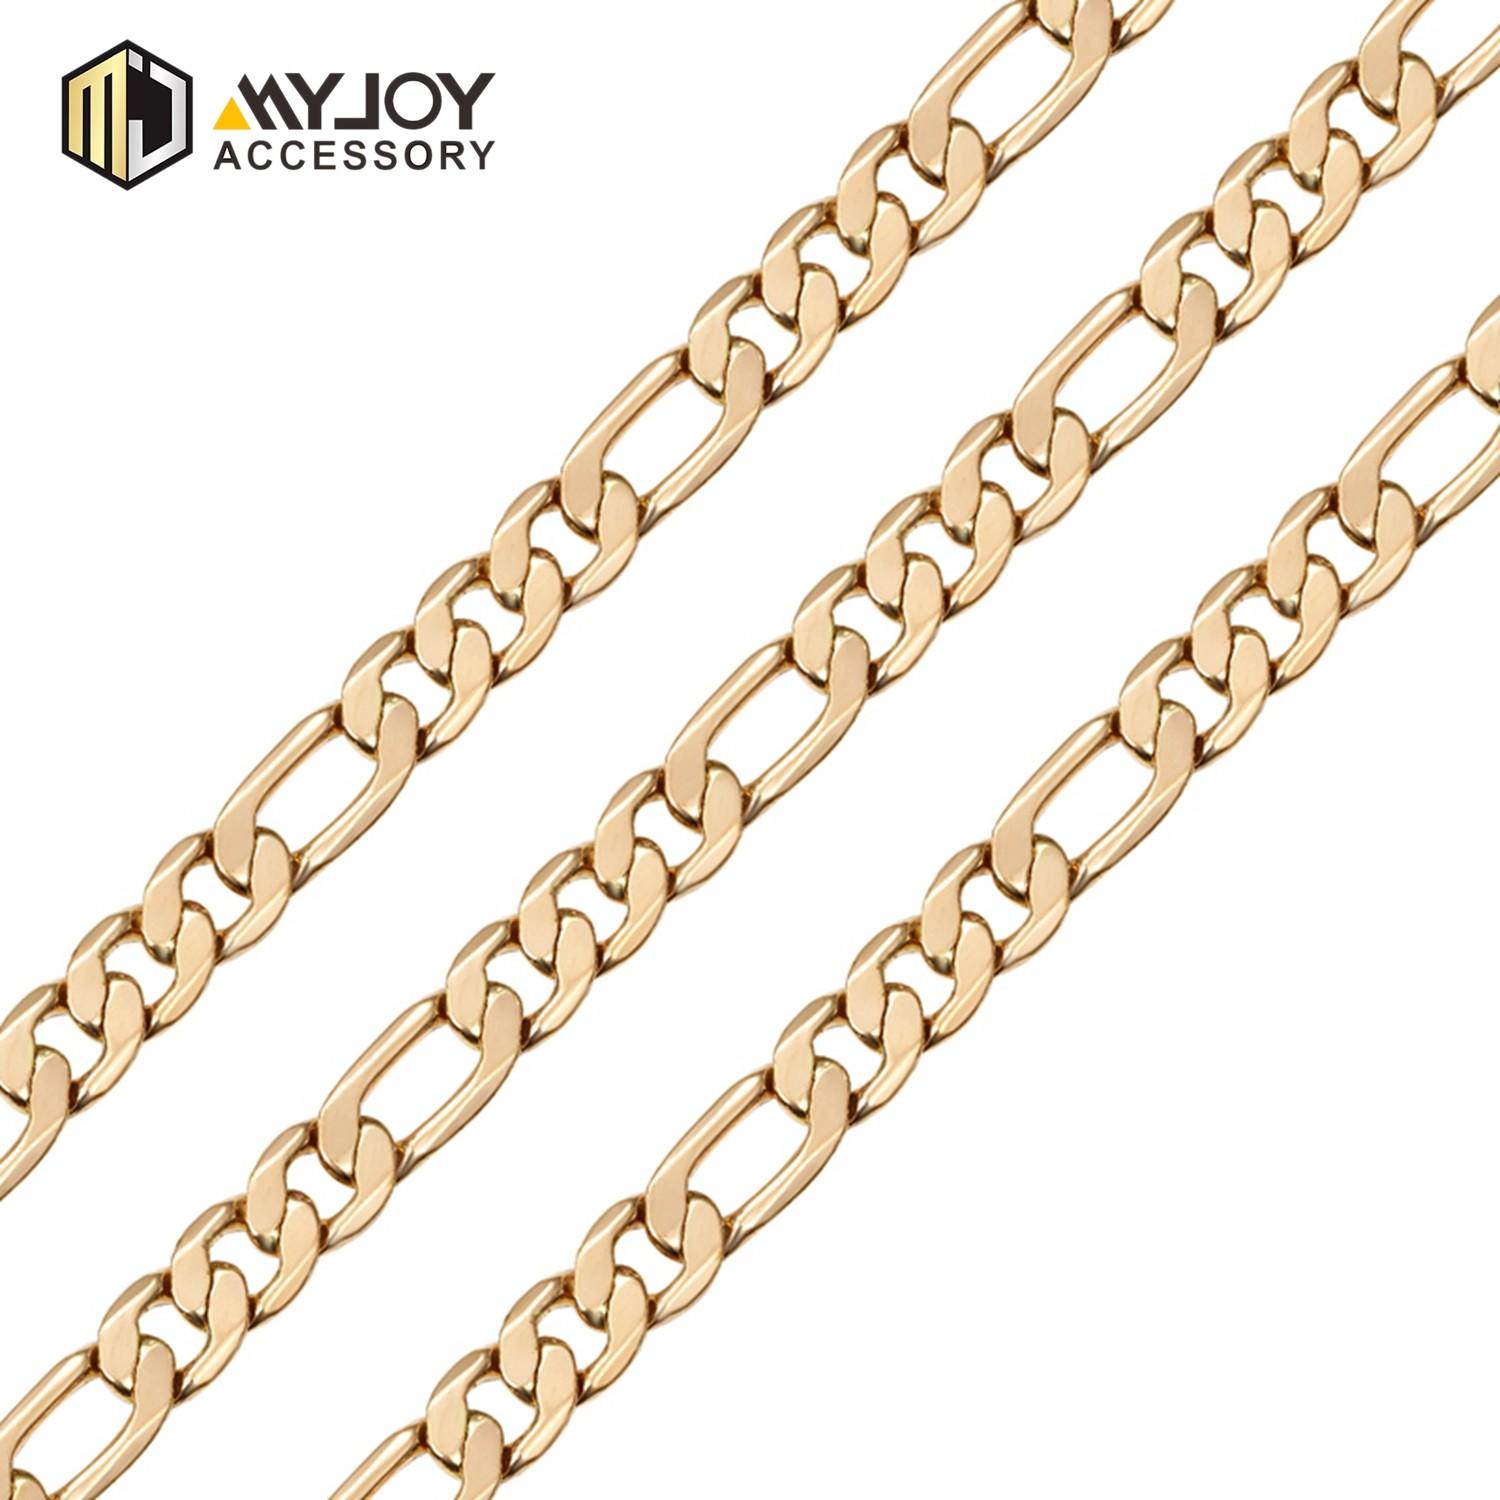 MYJOY Wholesale handbag chain strap manufacturers for handbag